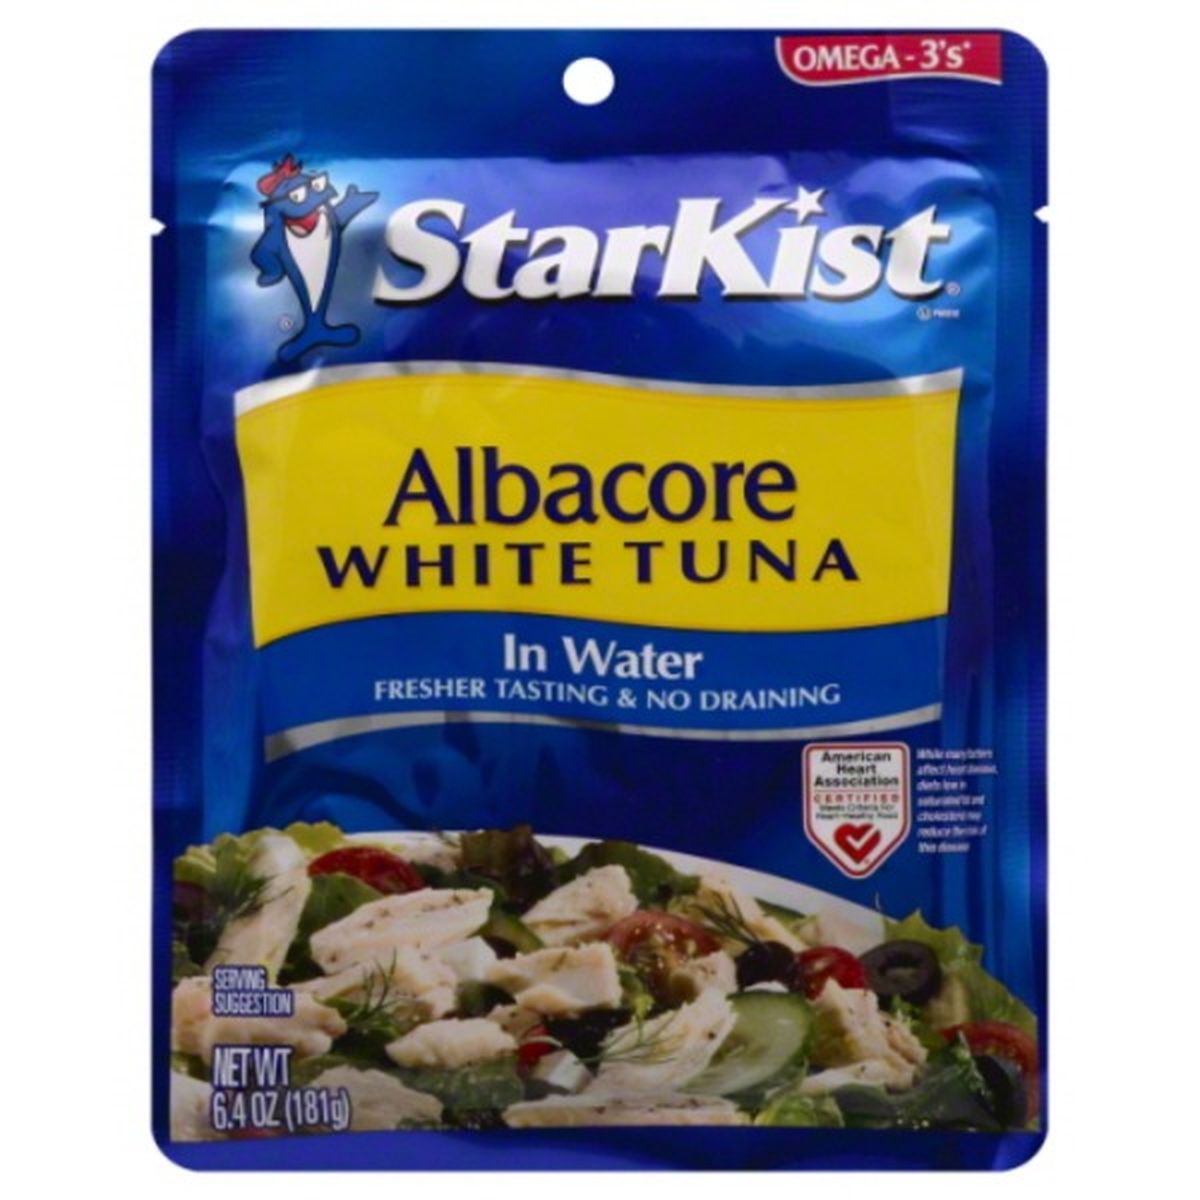 Calories in StarKist Tuna, Albacore White, in Water